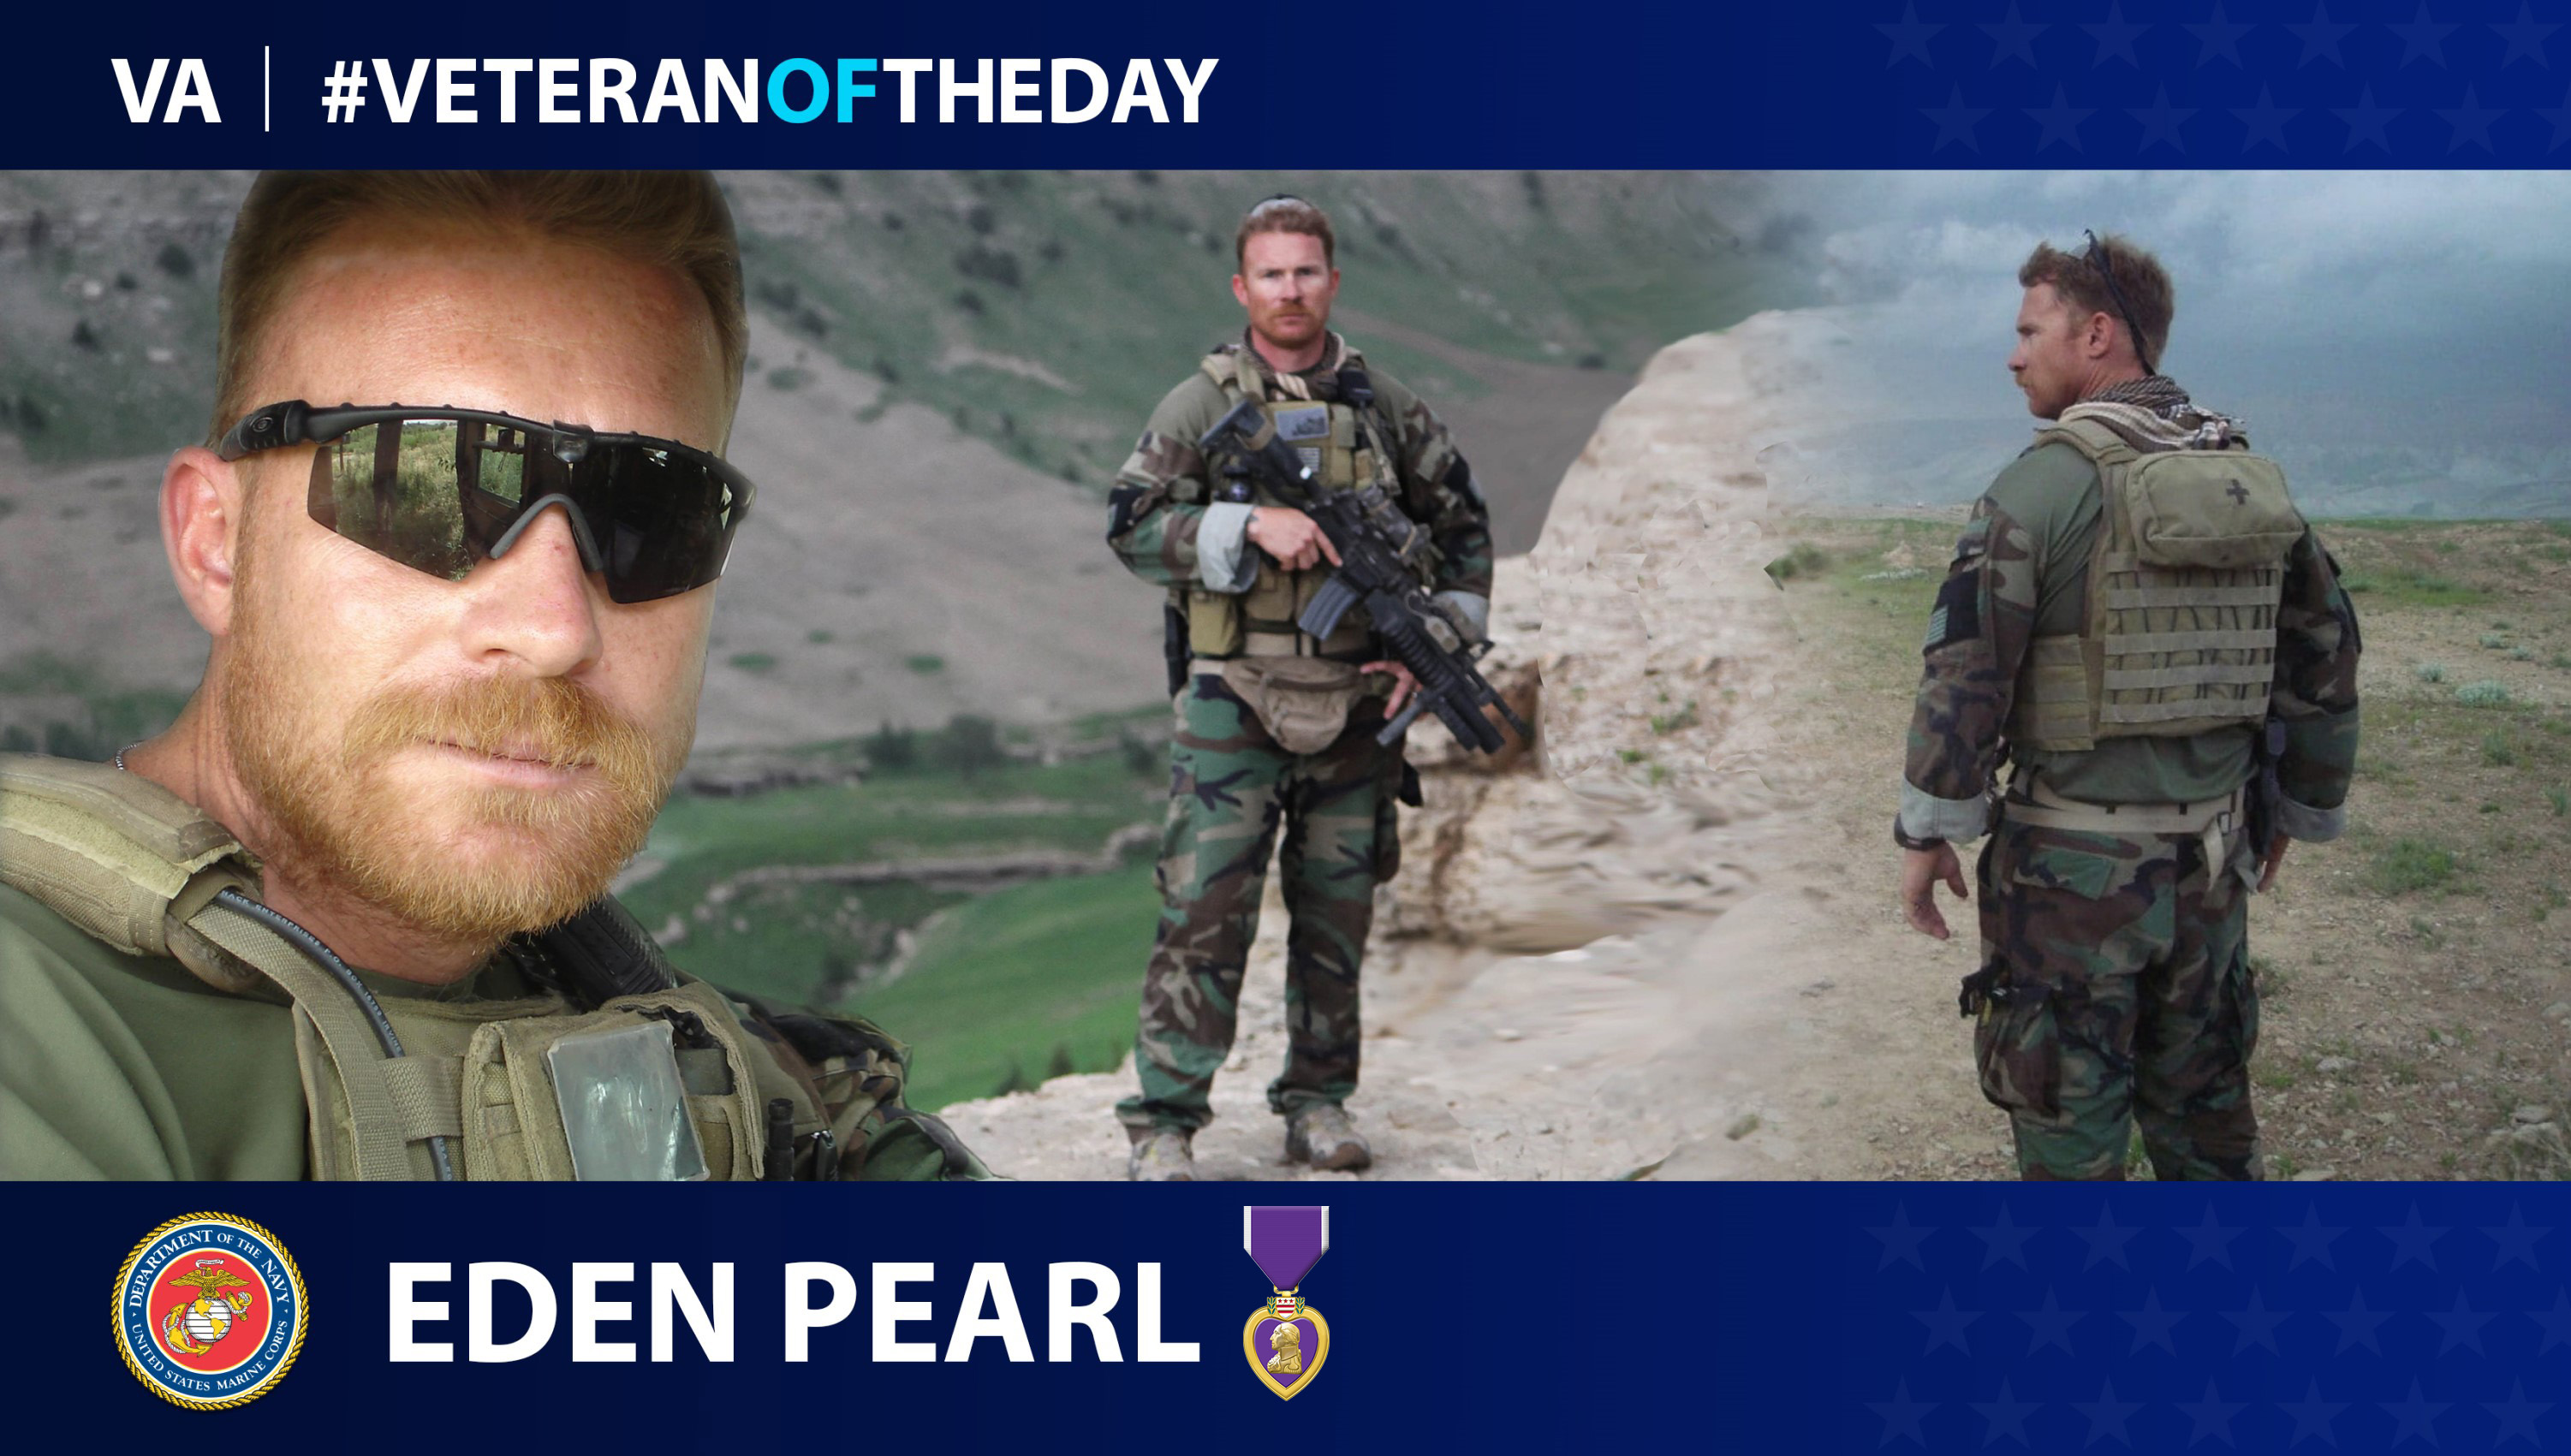 Marine Corps Veteran Eden Pearl is today's Veteran of the Day.